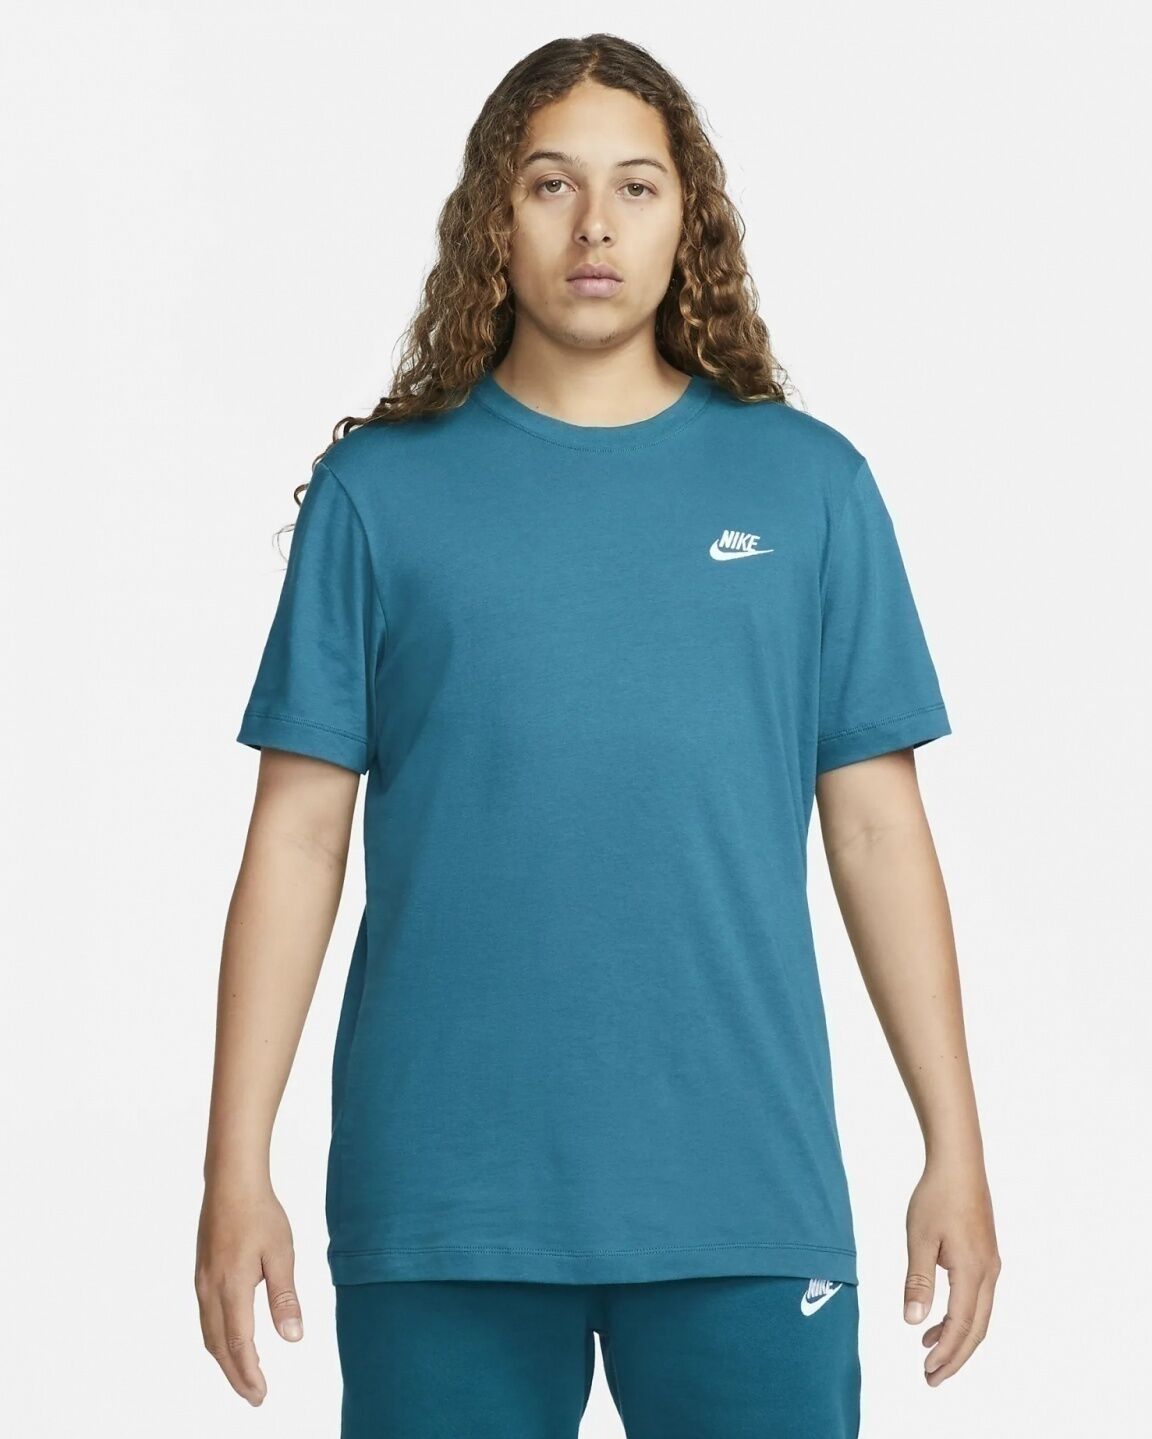 Nike T-shirt maglia maglietta UOMO Verde NSW CLUB TEE Cotone lifestyle